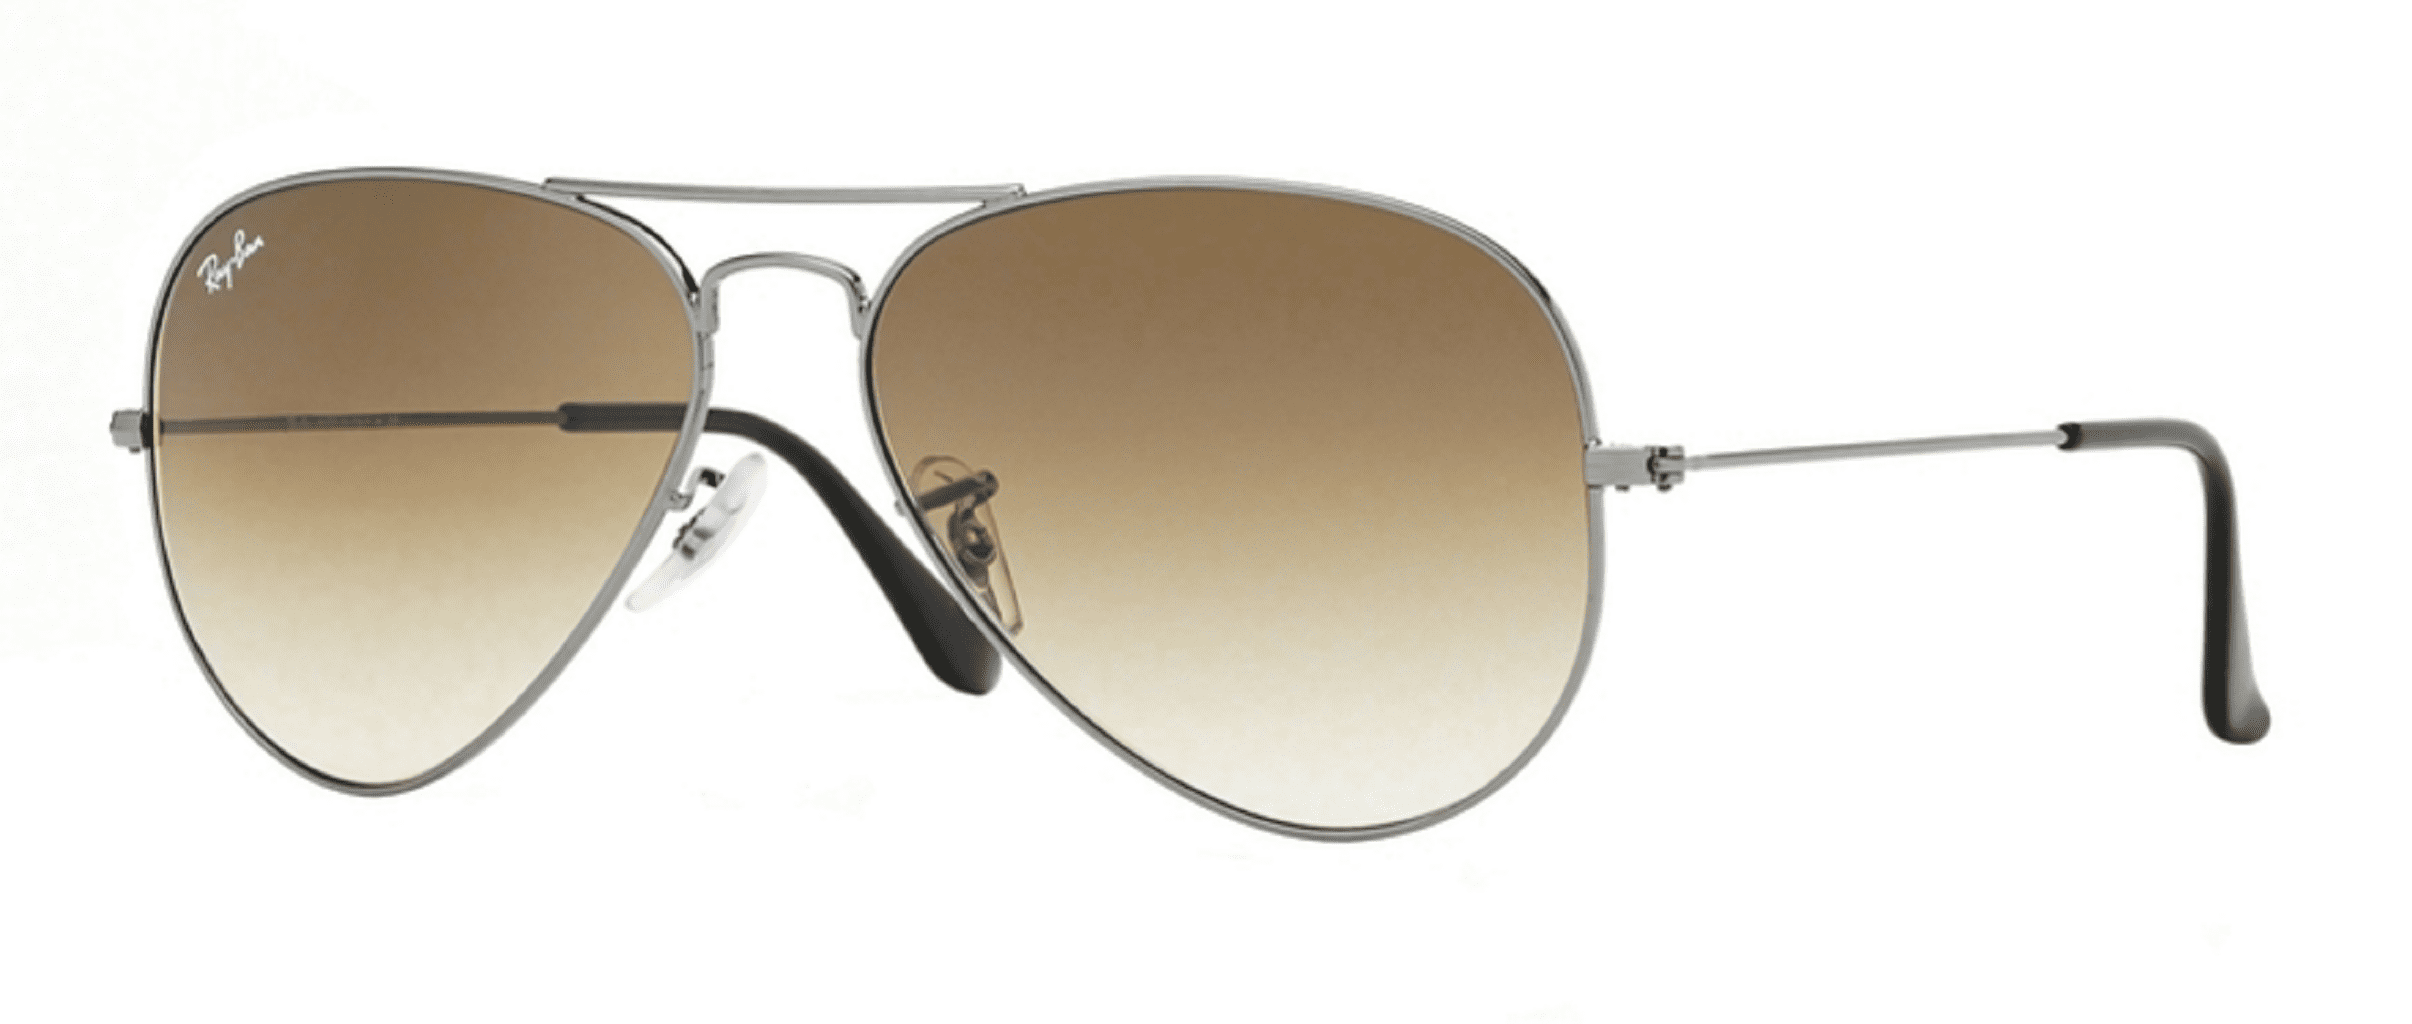 Ray-Ban Classic Aviator Sunglasses, 58MM, Gradient Lens -